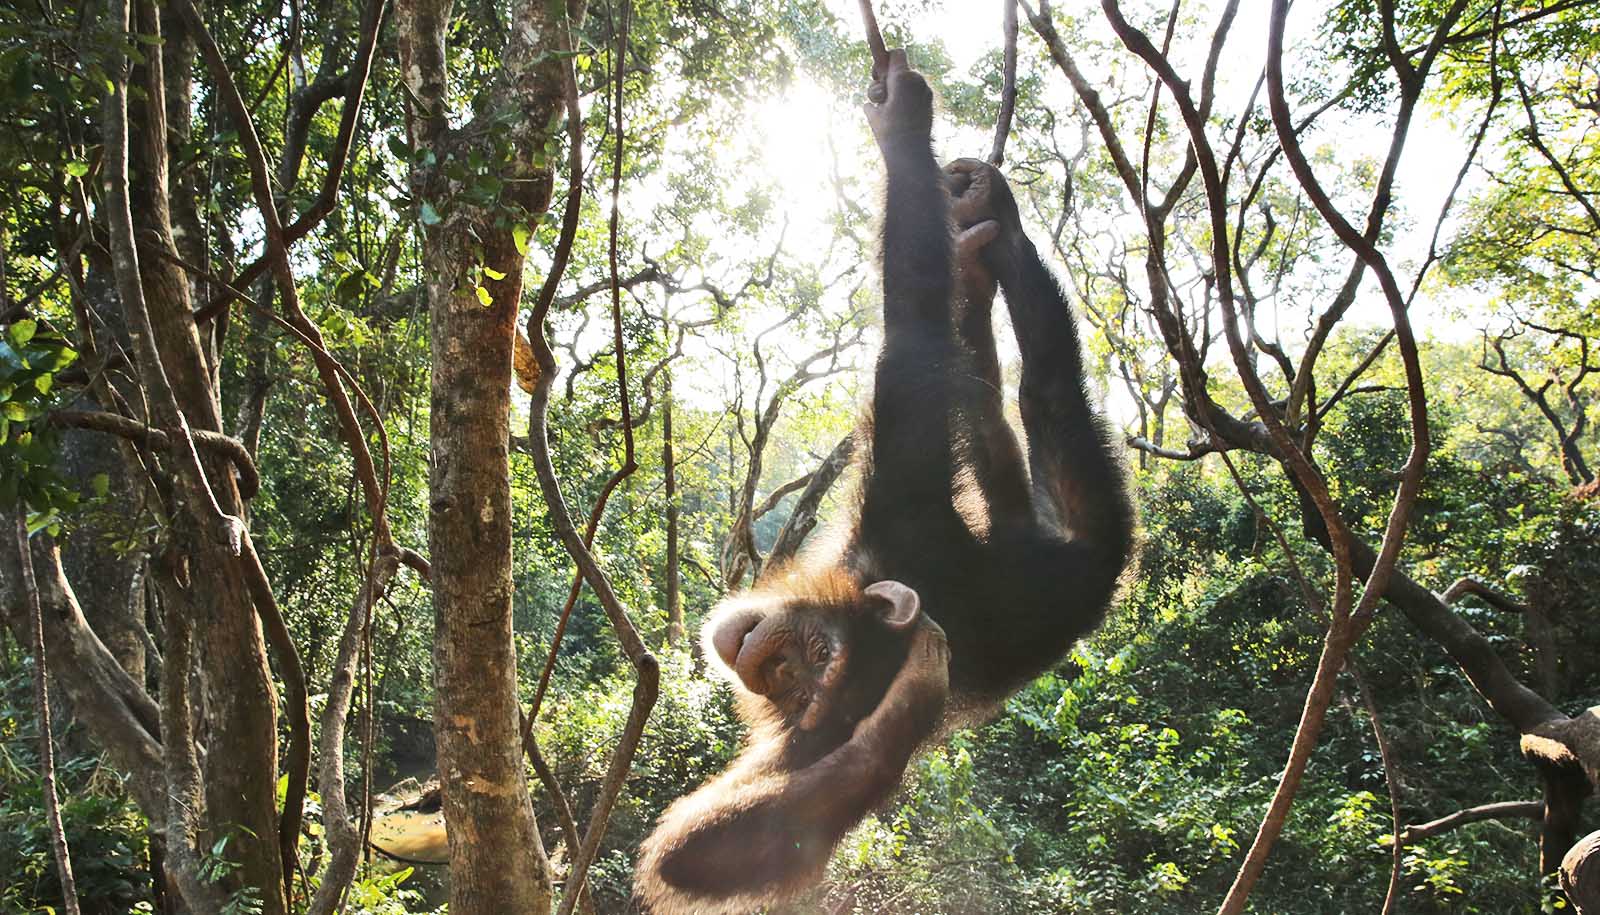 chimpanzee swings from vine among trees